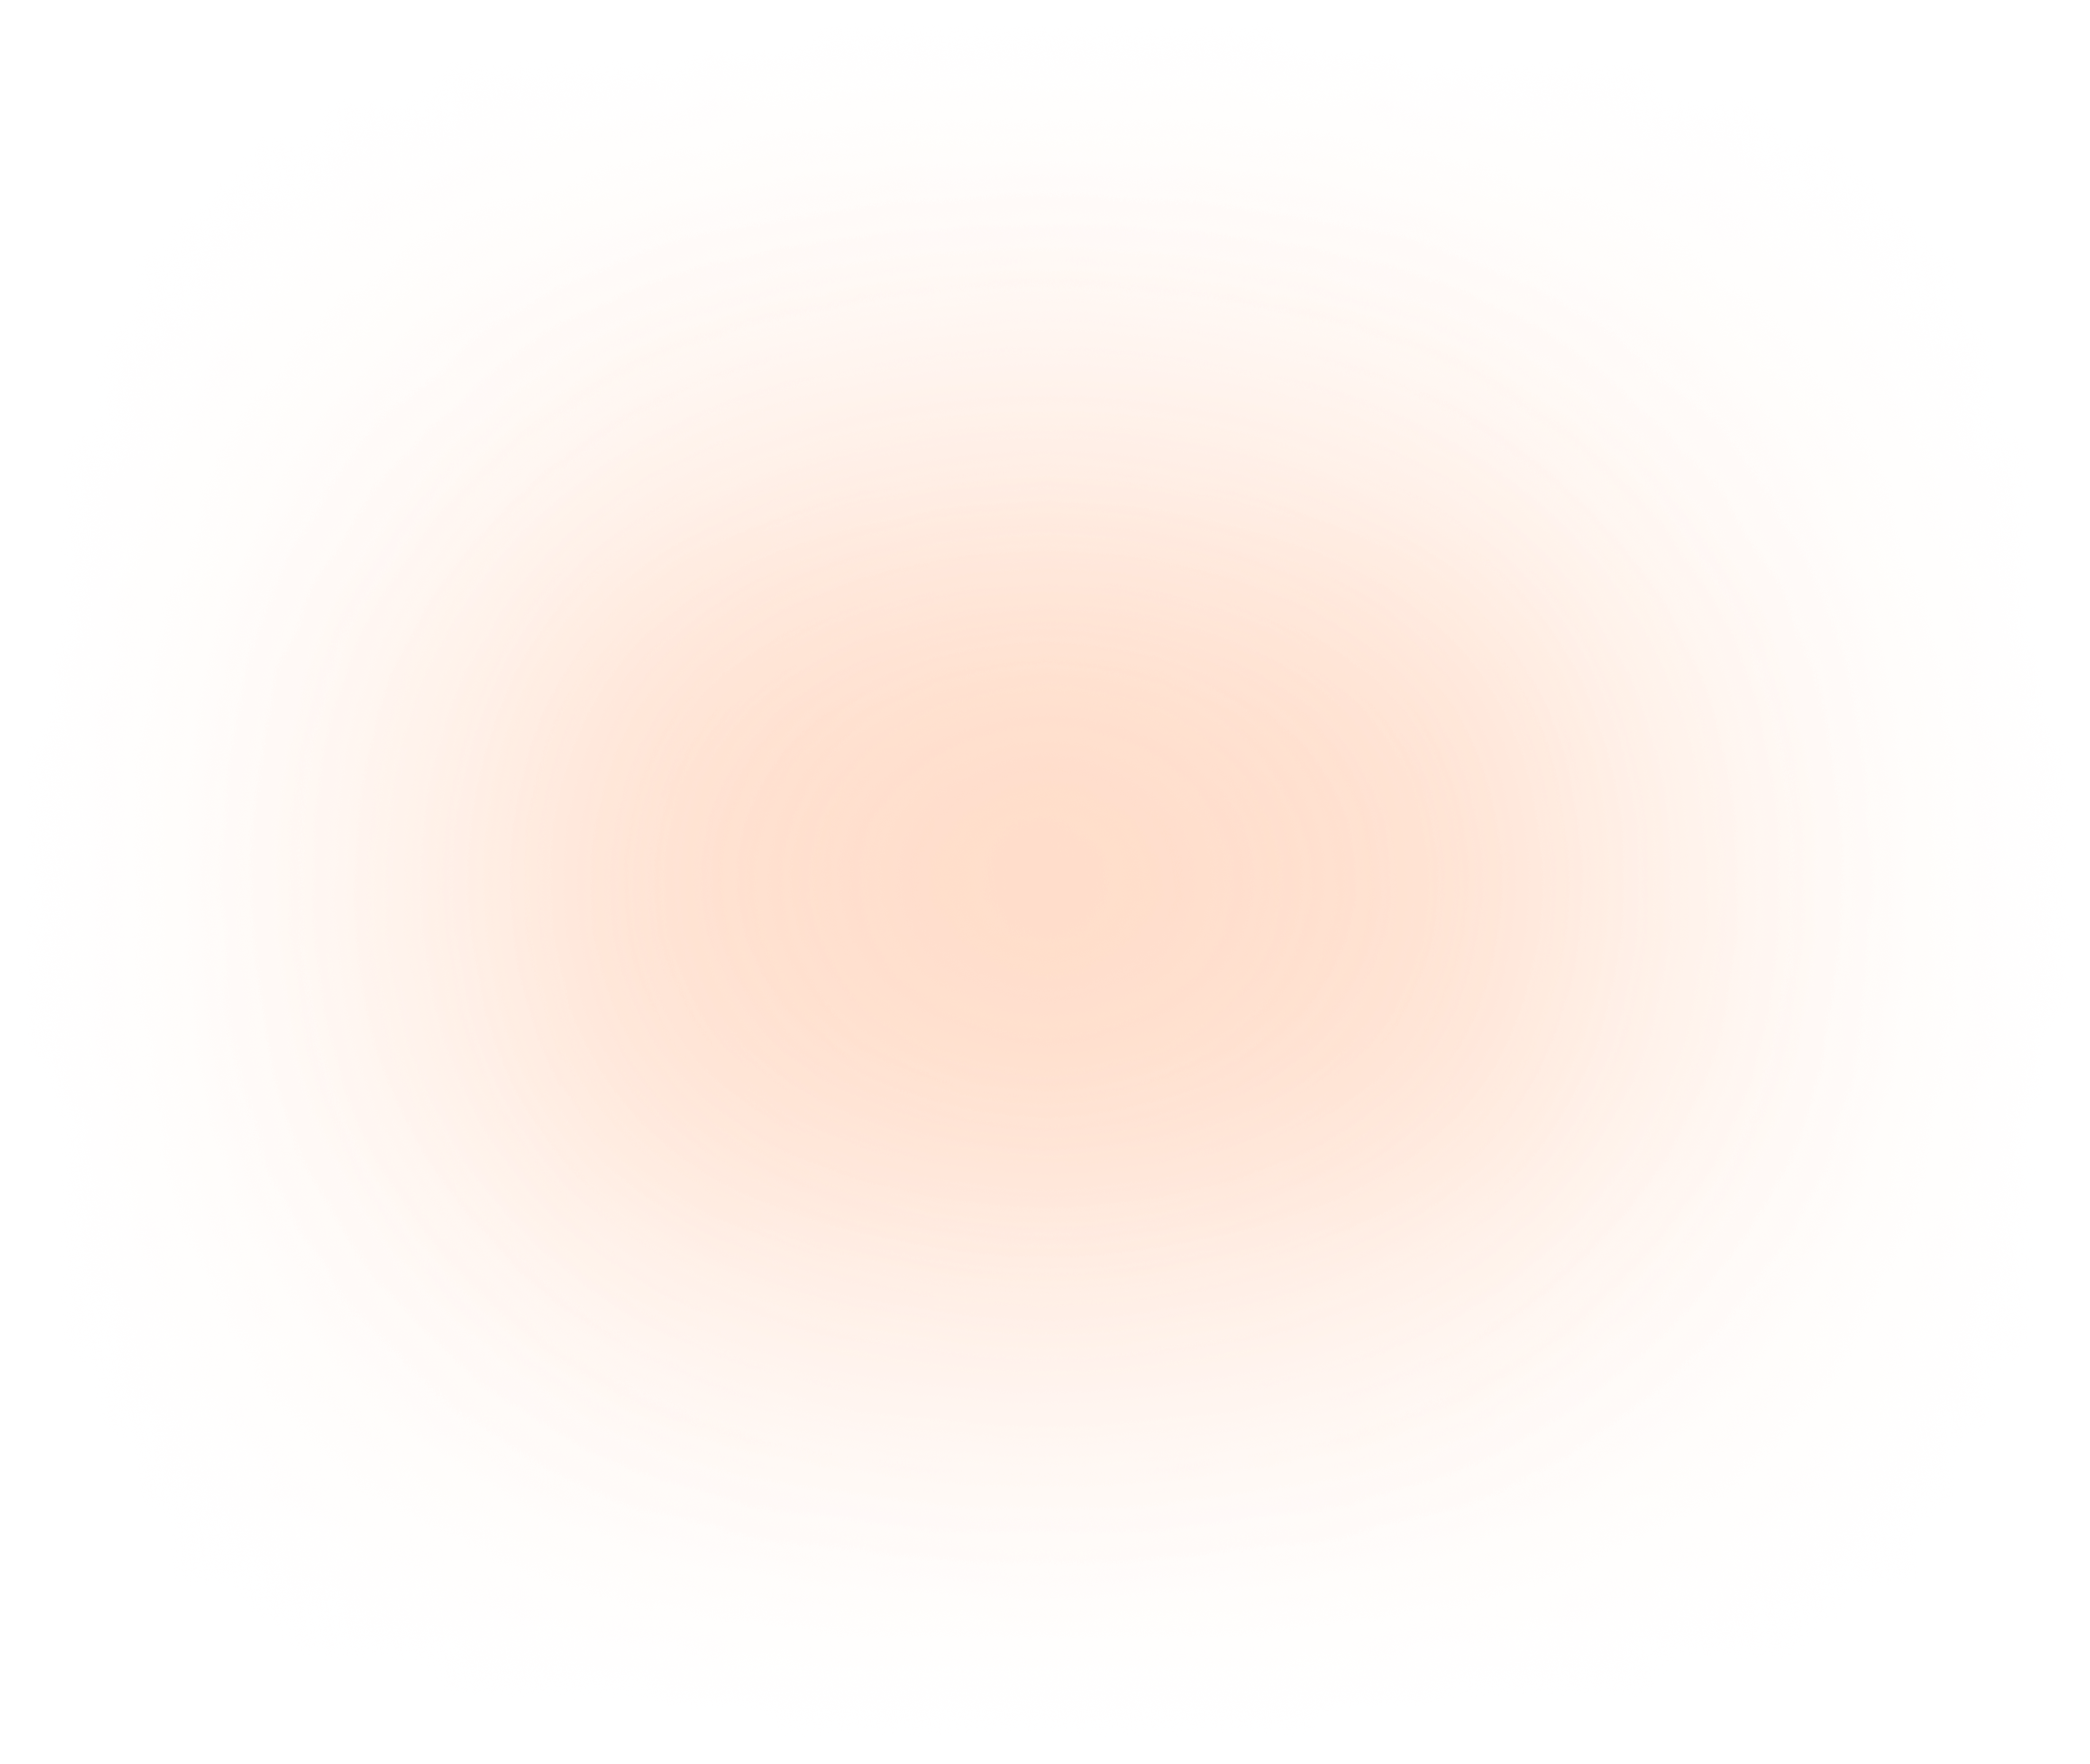 Orange background blur image